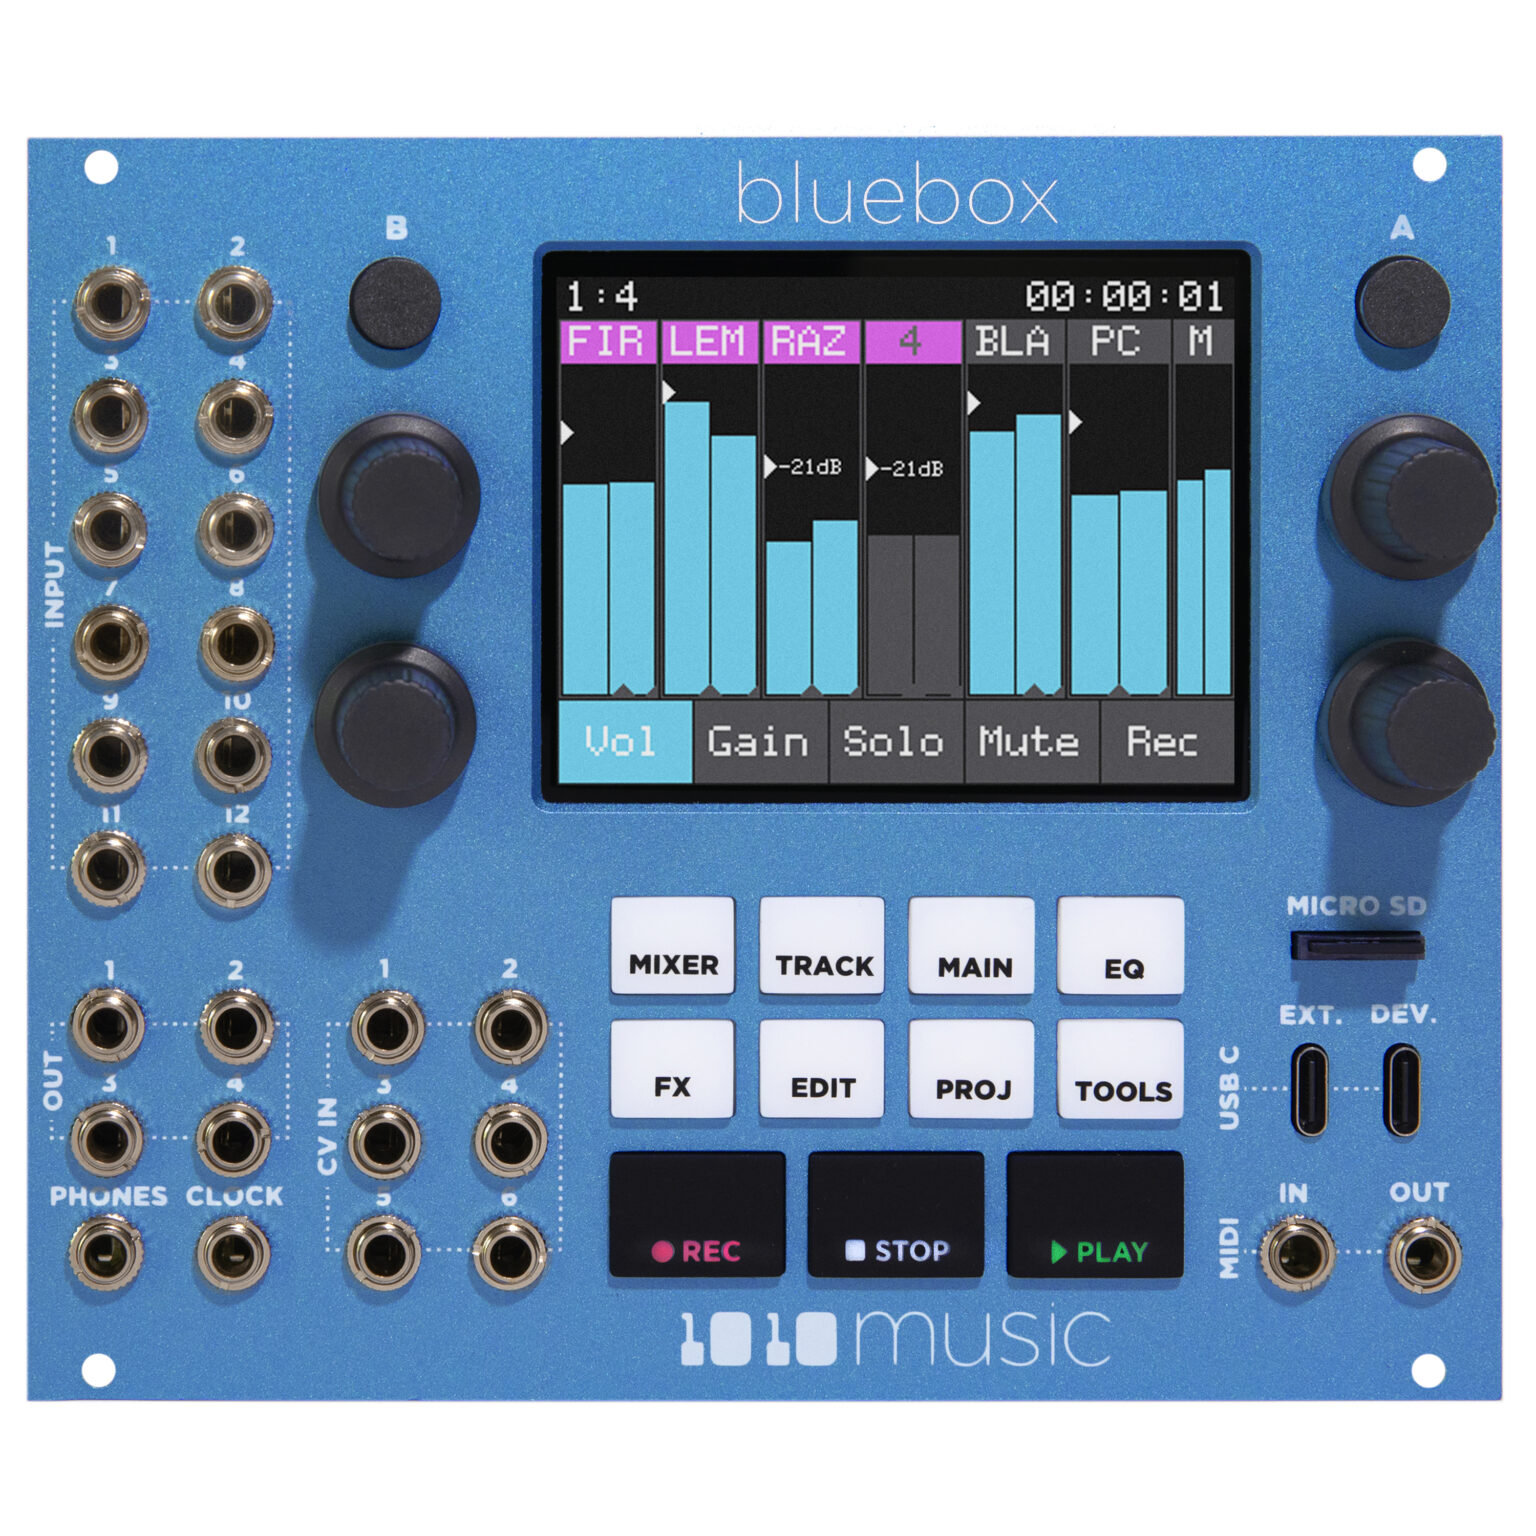 bluebox Eurorack module with meter bridge displayed in Mixer mode.